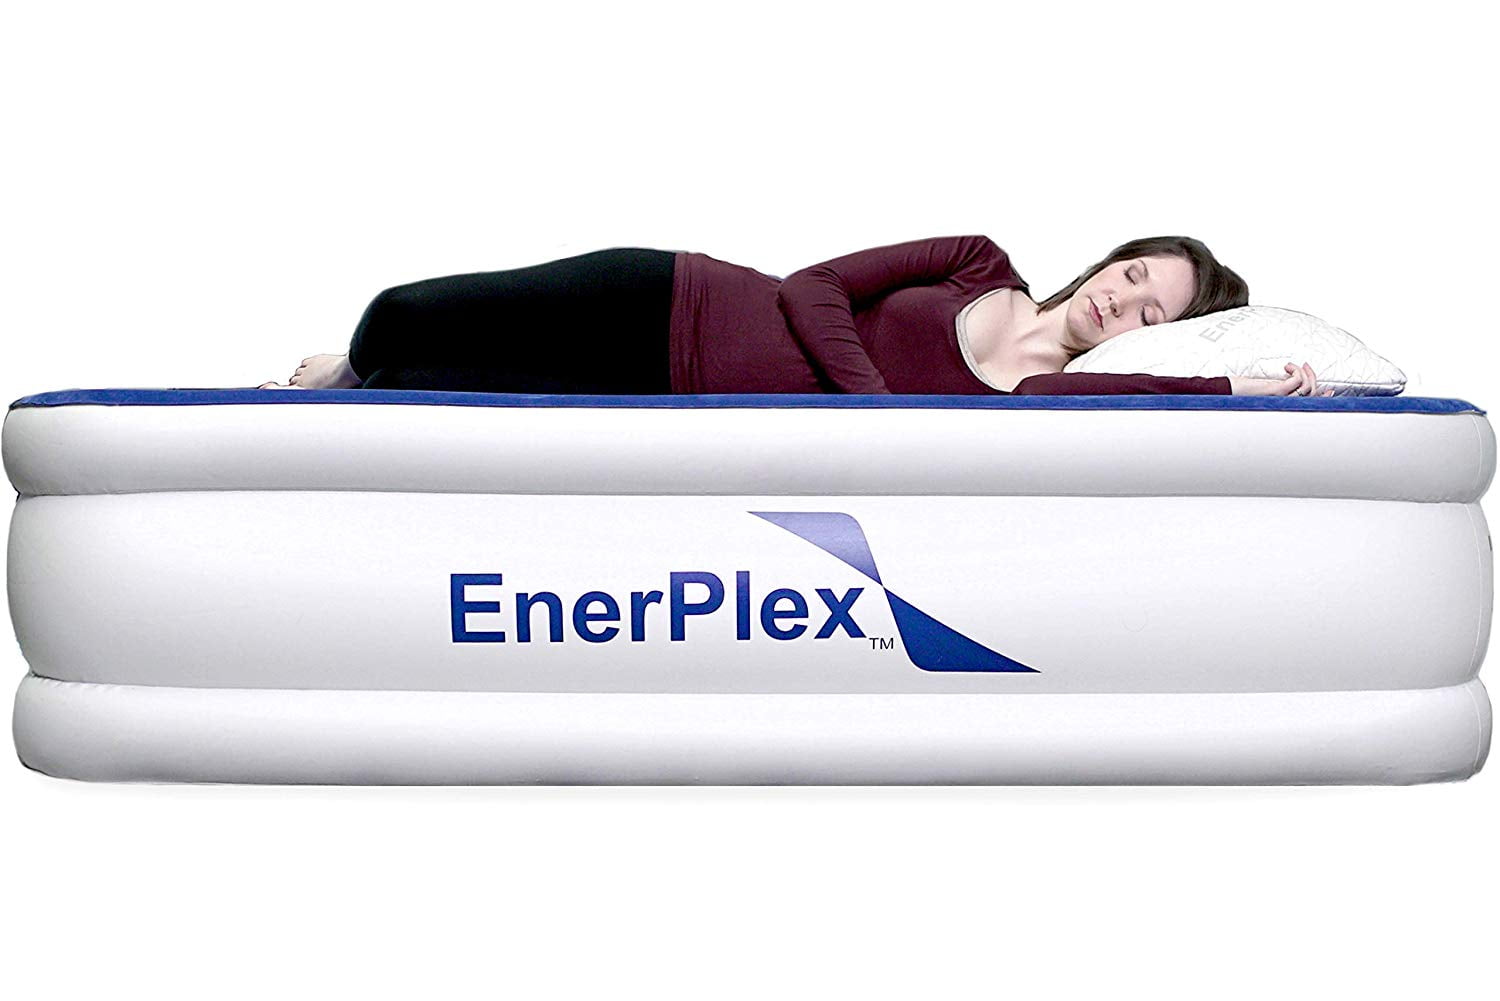 enerplex air mattress with built-in pump